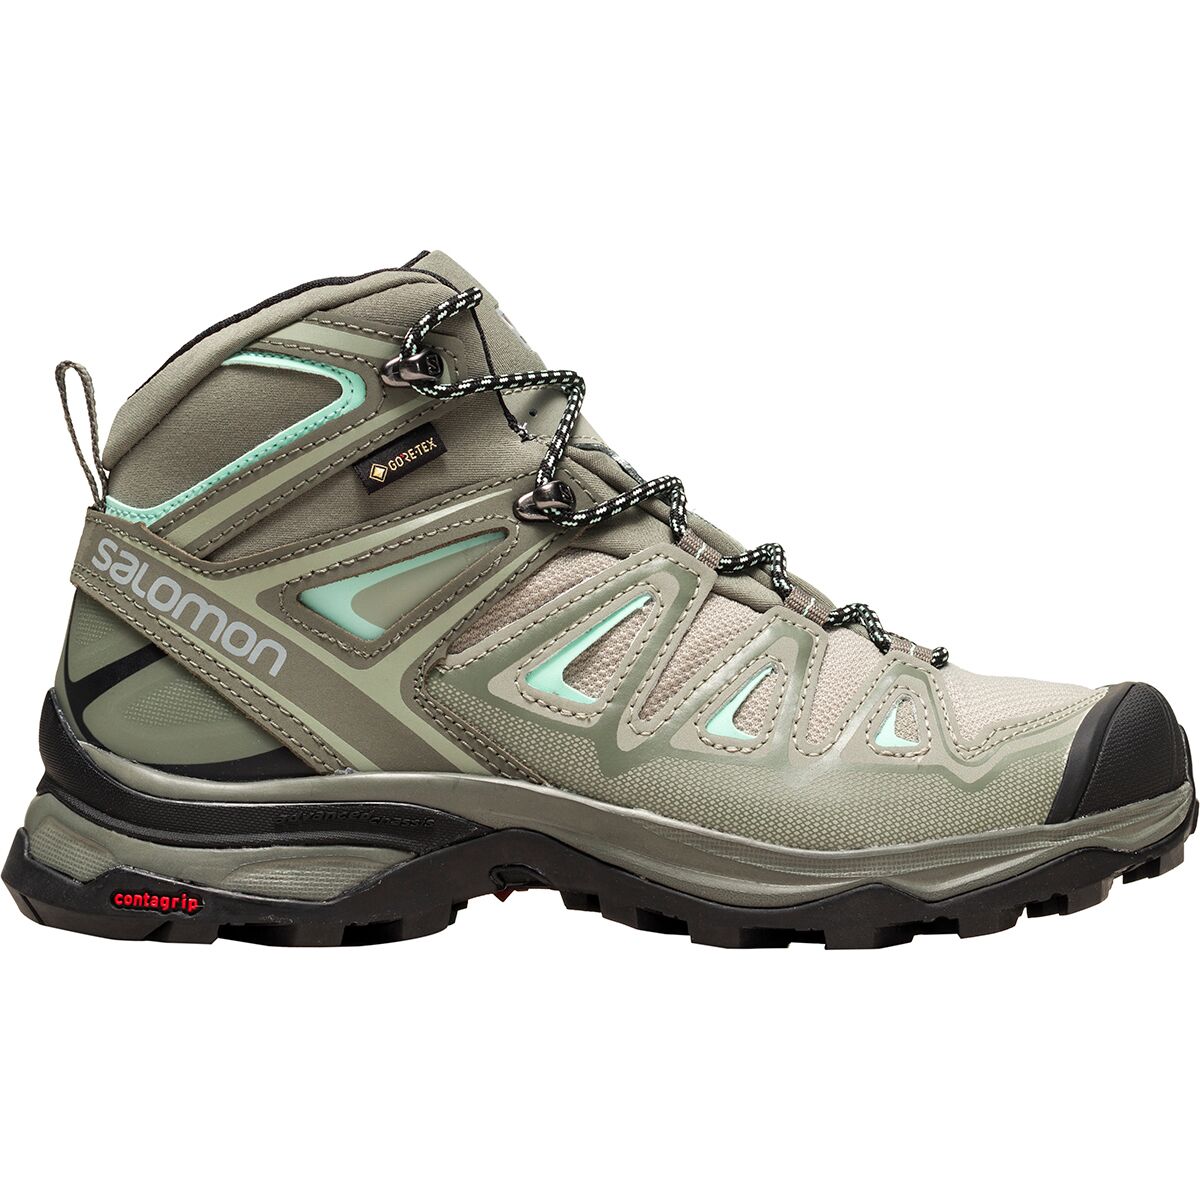 Salomon X Ultra 3 Mid GTX Hiking Boot - Women's